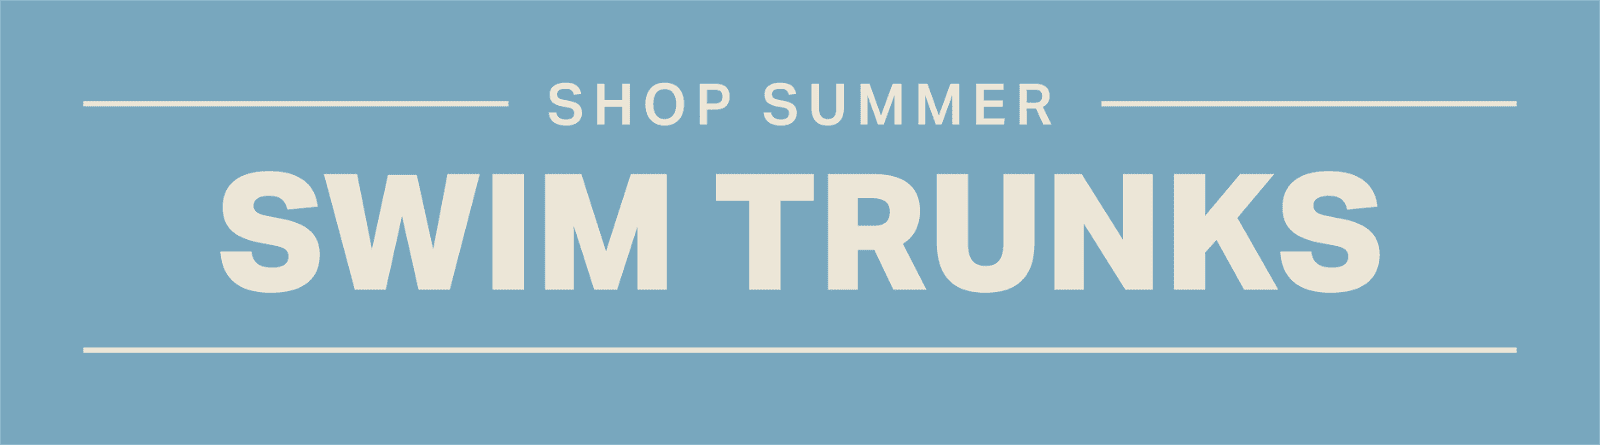 Shop Summer Swim Trunks